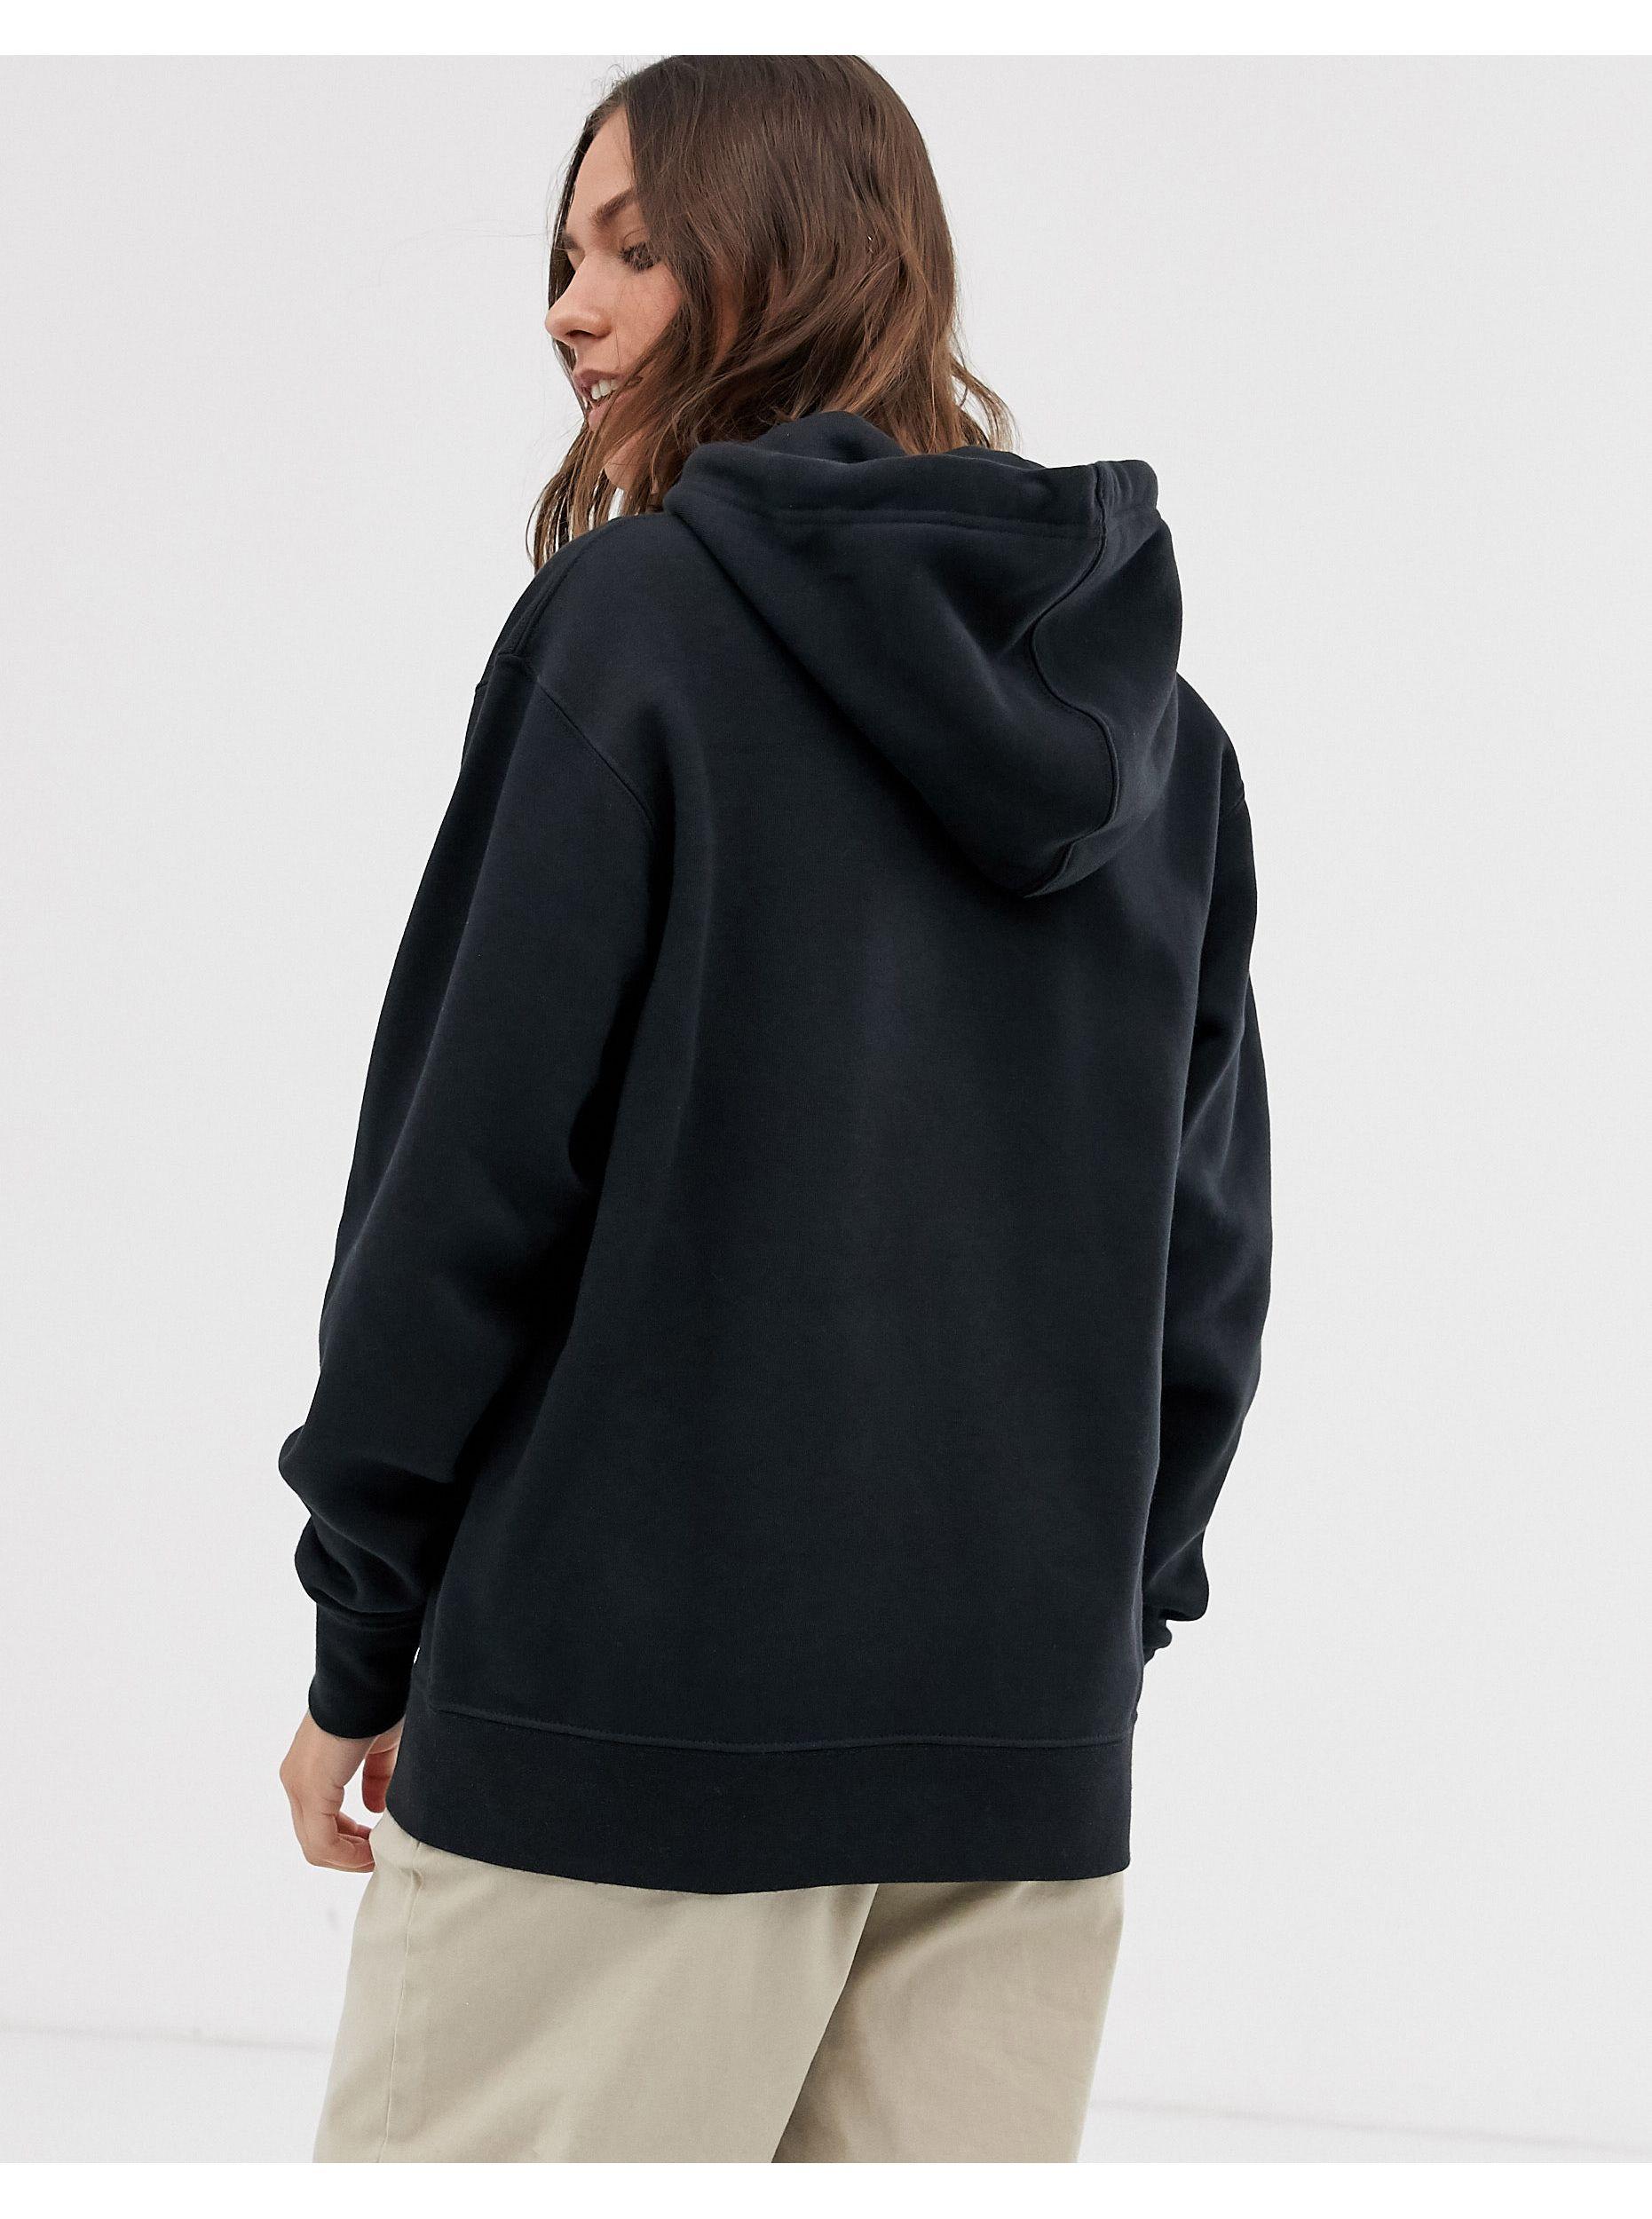 nike oversized hoodie grey